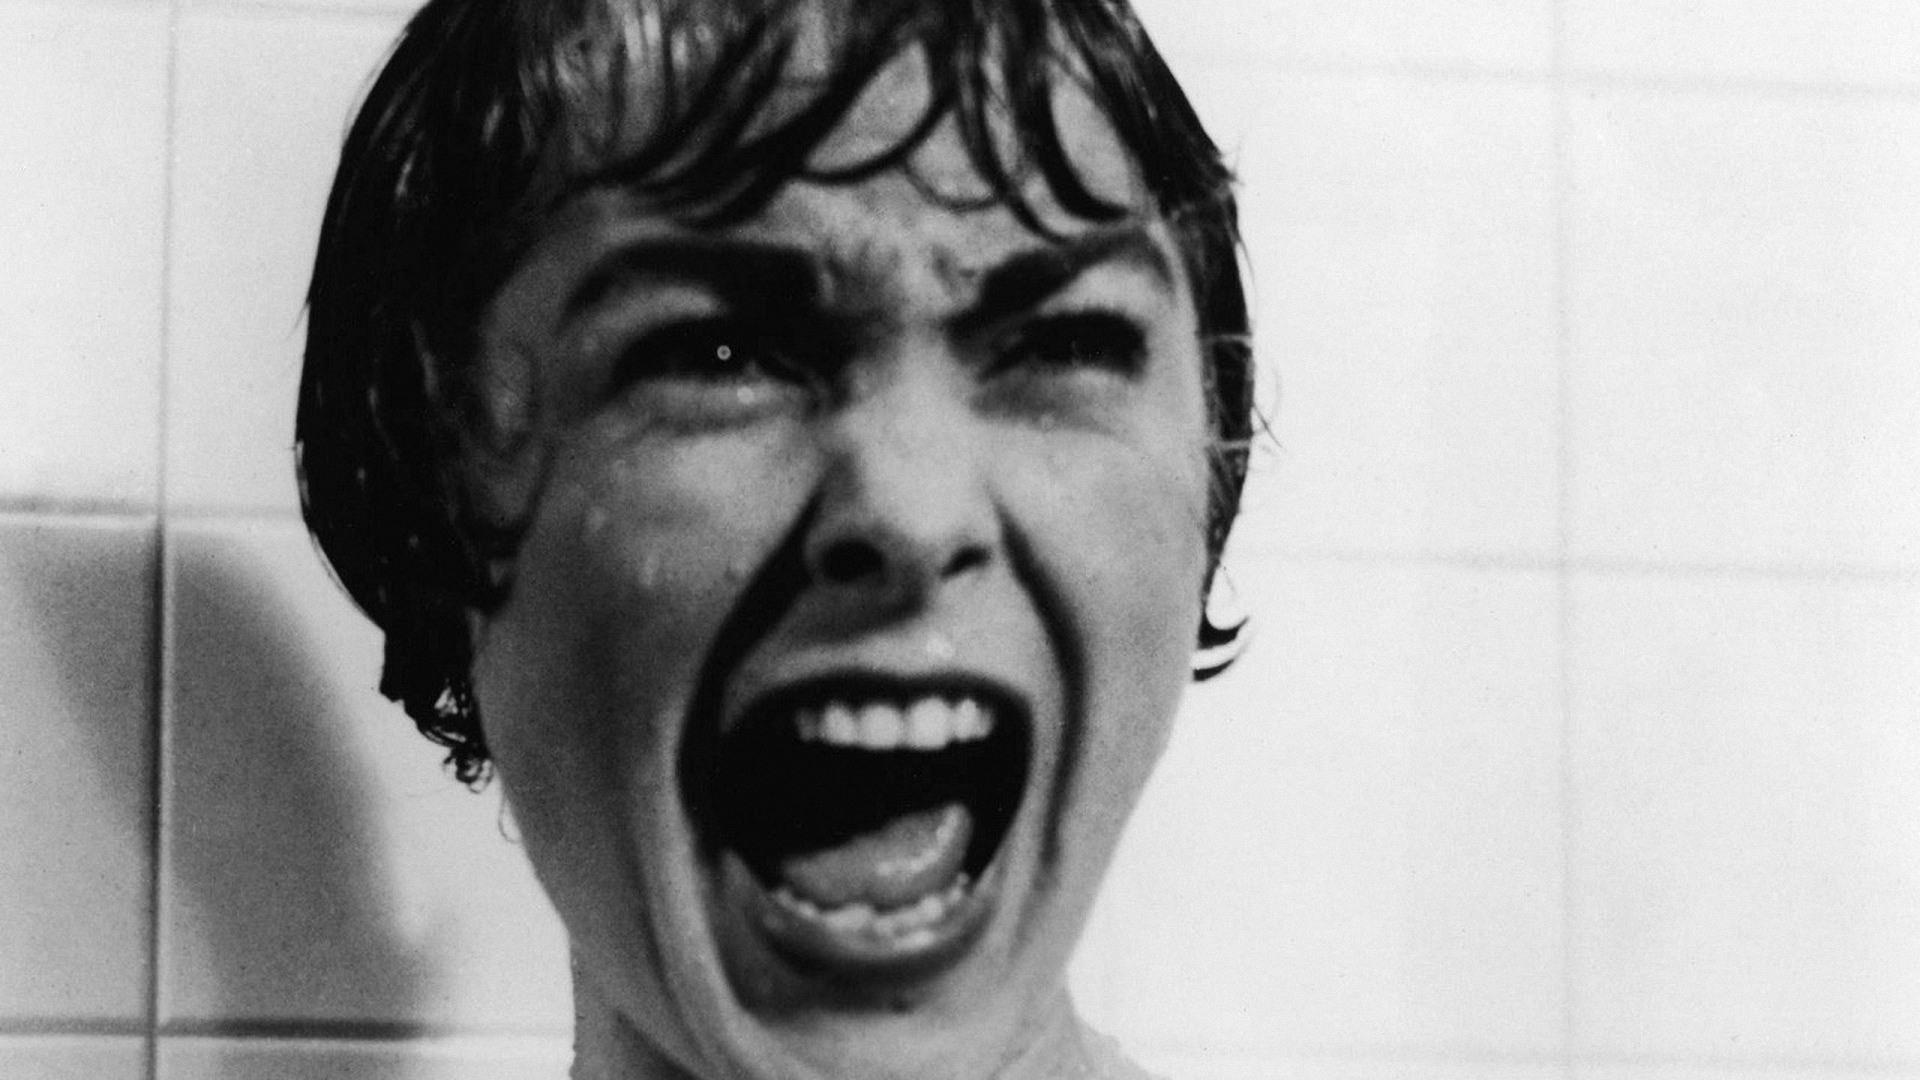 Marion Crane screaming in terror in the 1960s Hitchcock film Psycho